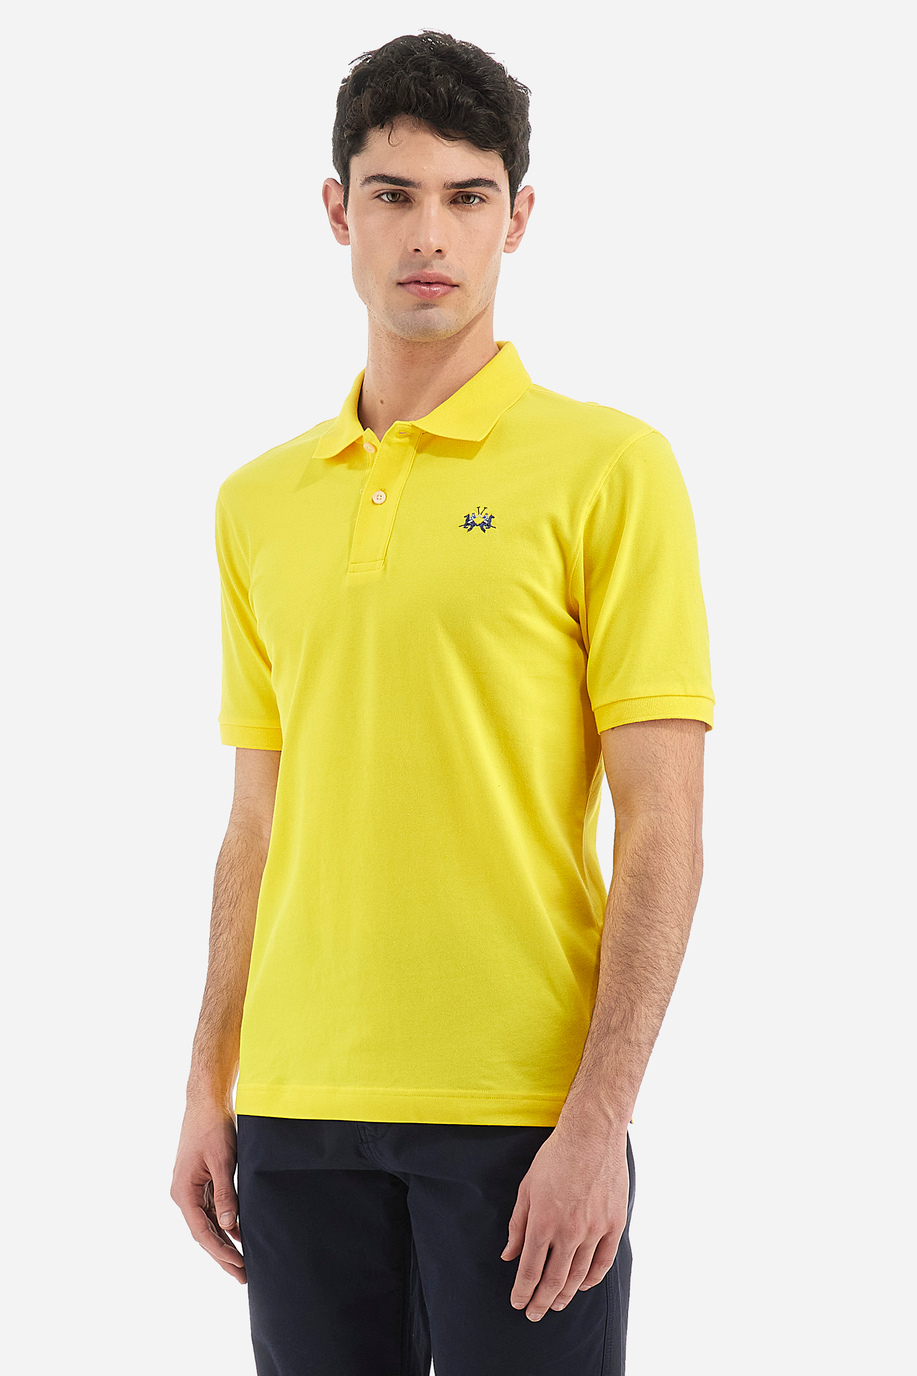 Kurzärmliges Herren-Poloshirt aus Stretch-Baumwolle slim fit  -  Eduardo - Poloshirts | La Martina - Official Online Shop